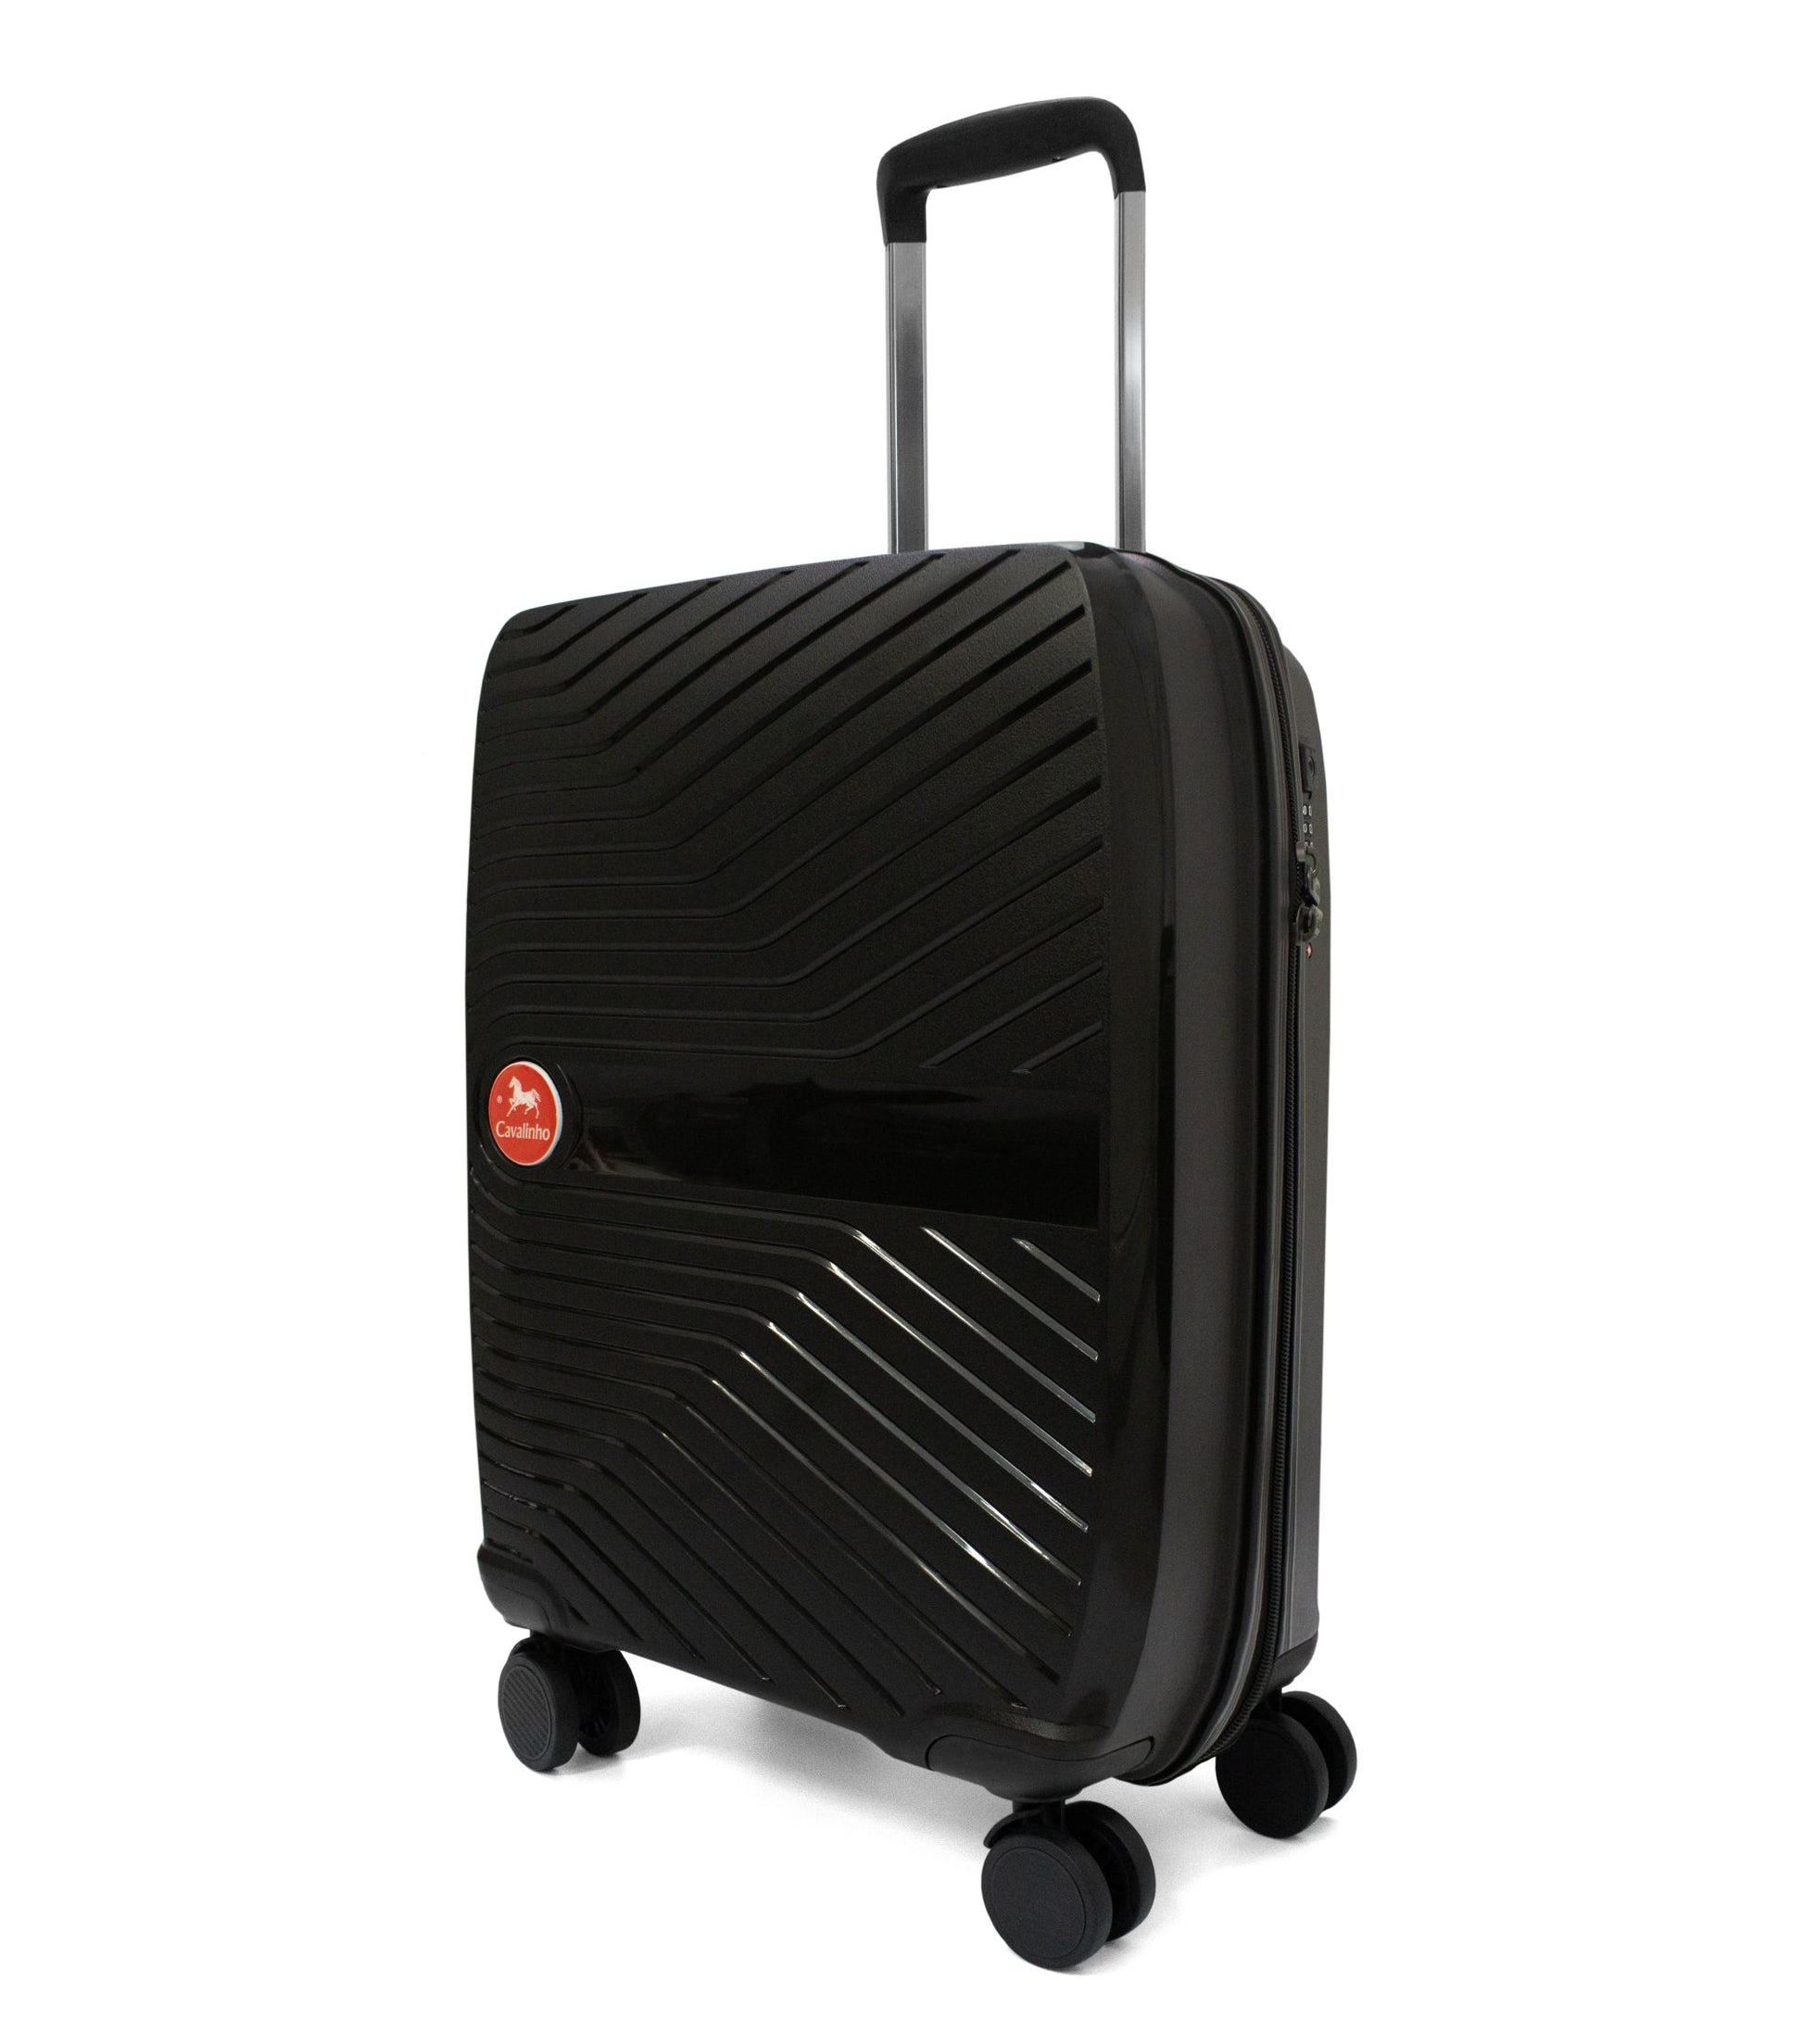 Cavalinho Colorful Carry-on Hardside Luggage (19") - 19 inch Black - 68020004.01.19_2